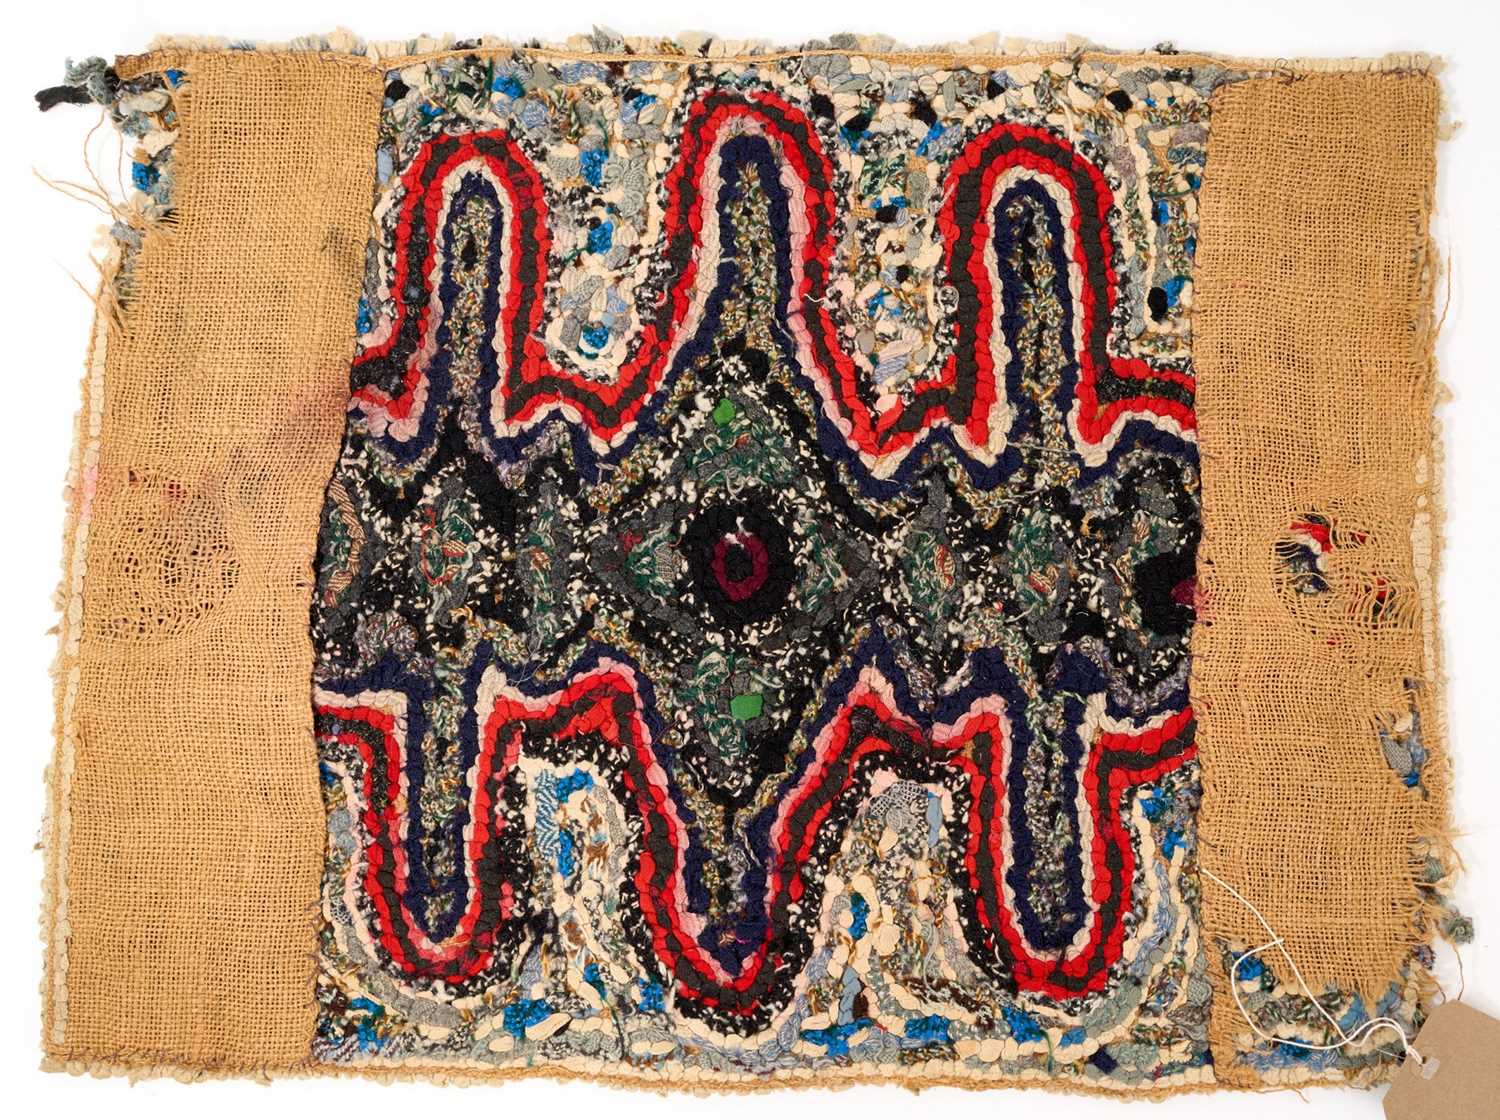 Small handmade rag rug by Lucie Aldridge - Image 2 of 2